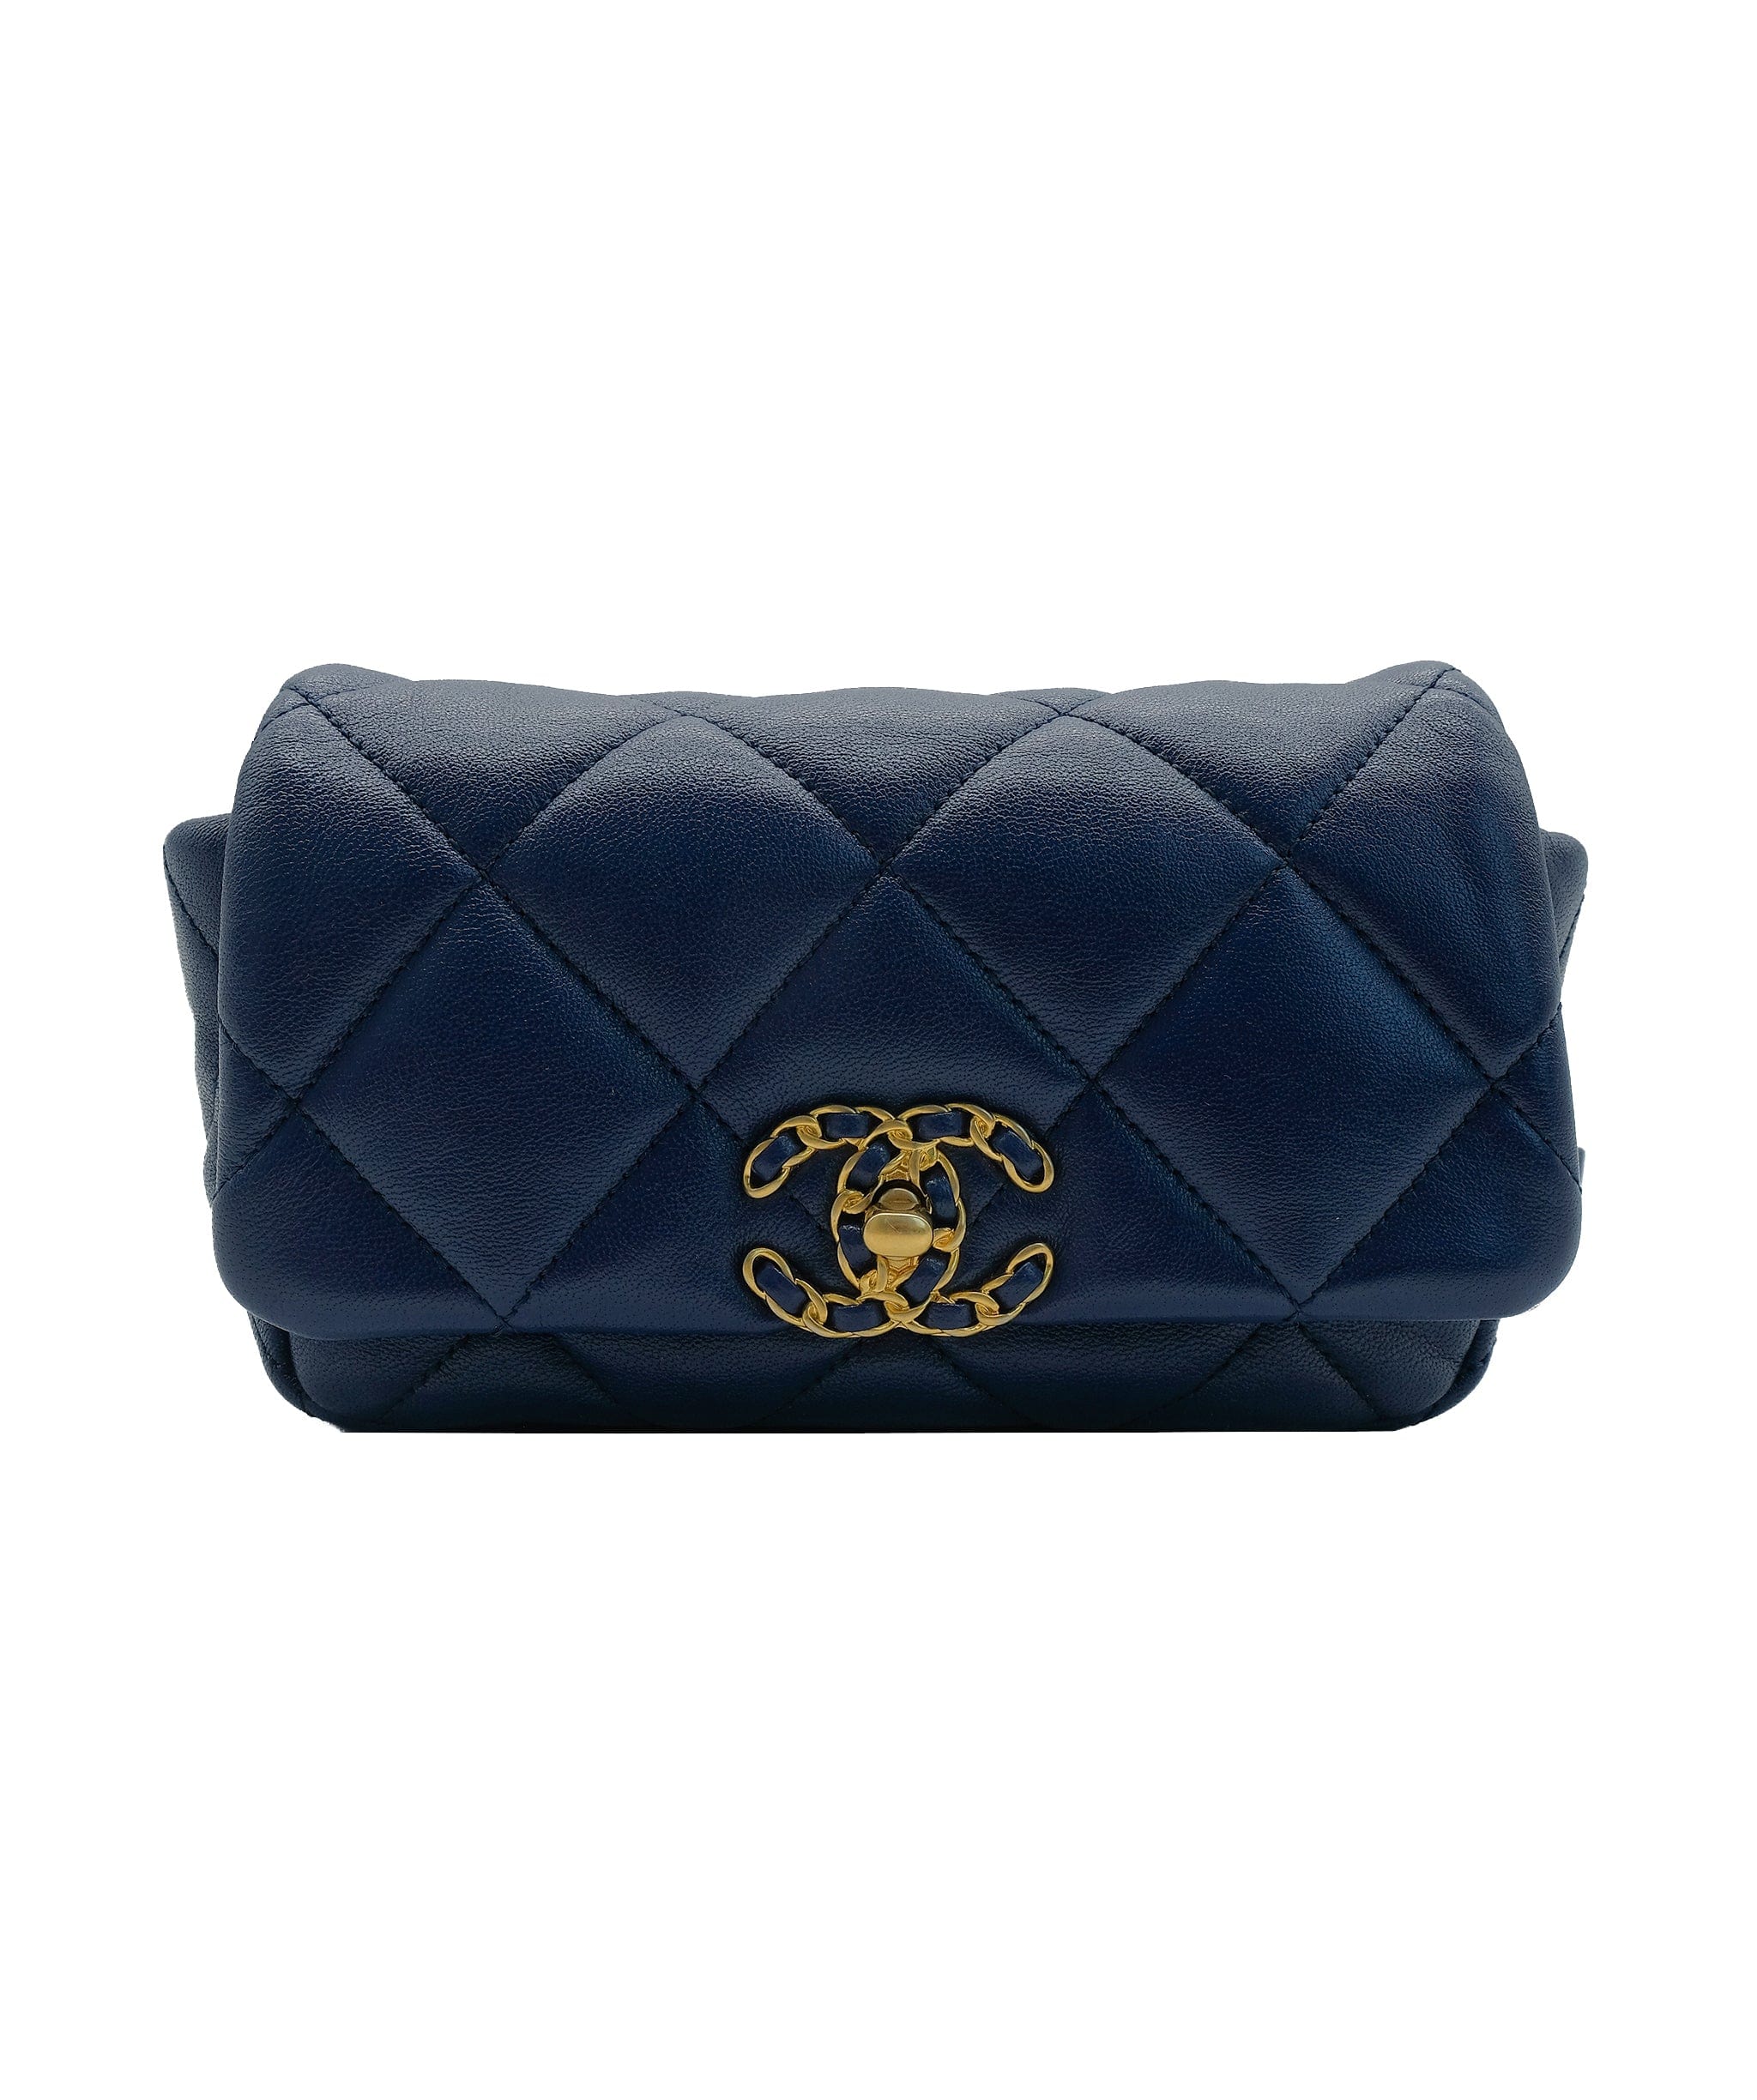 Chanel Navy Blue Waist Bag RJC2565